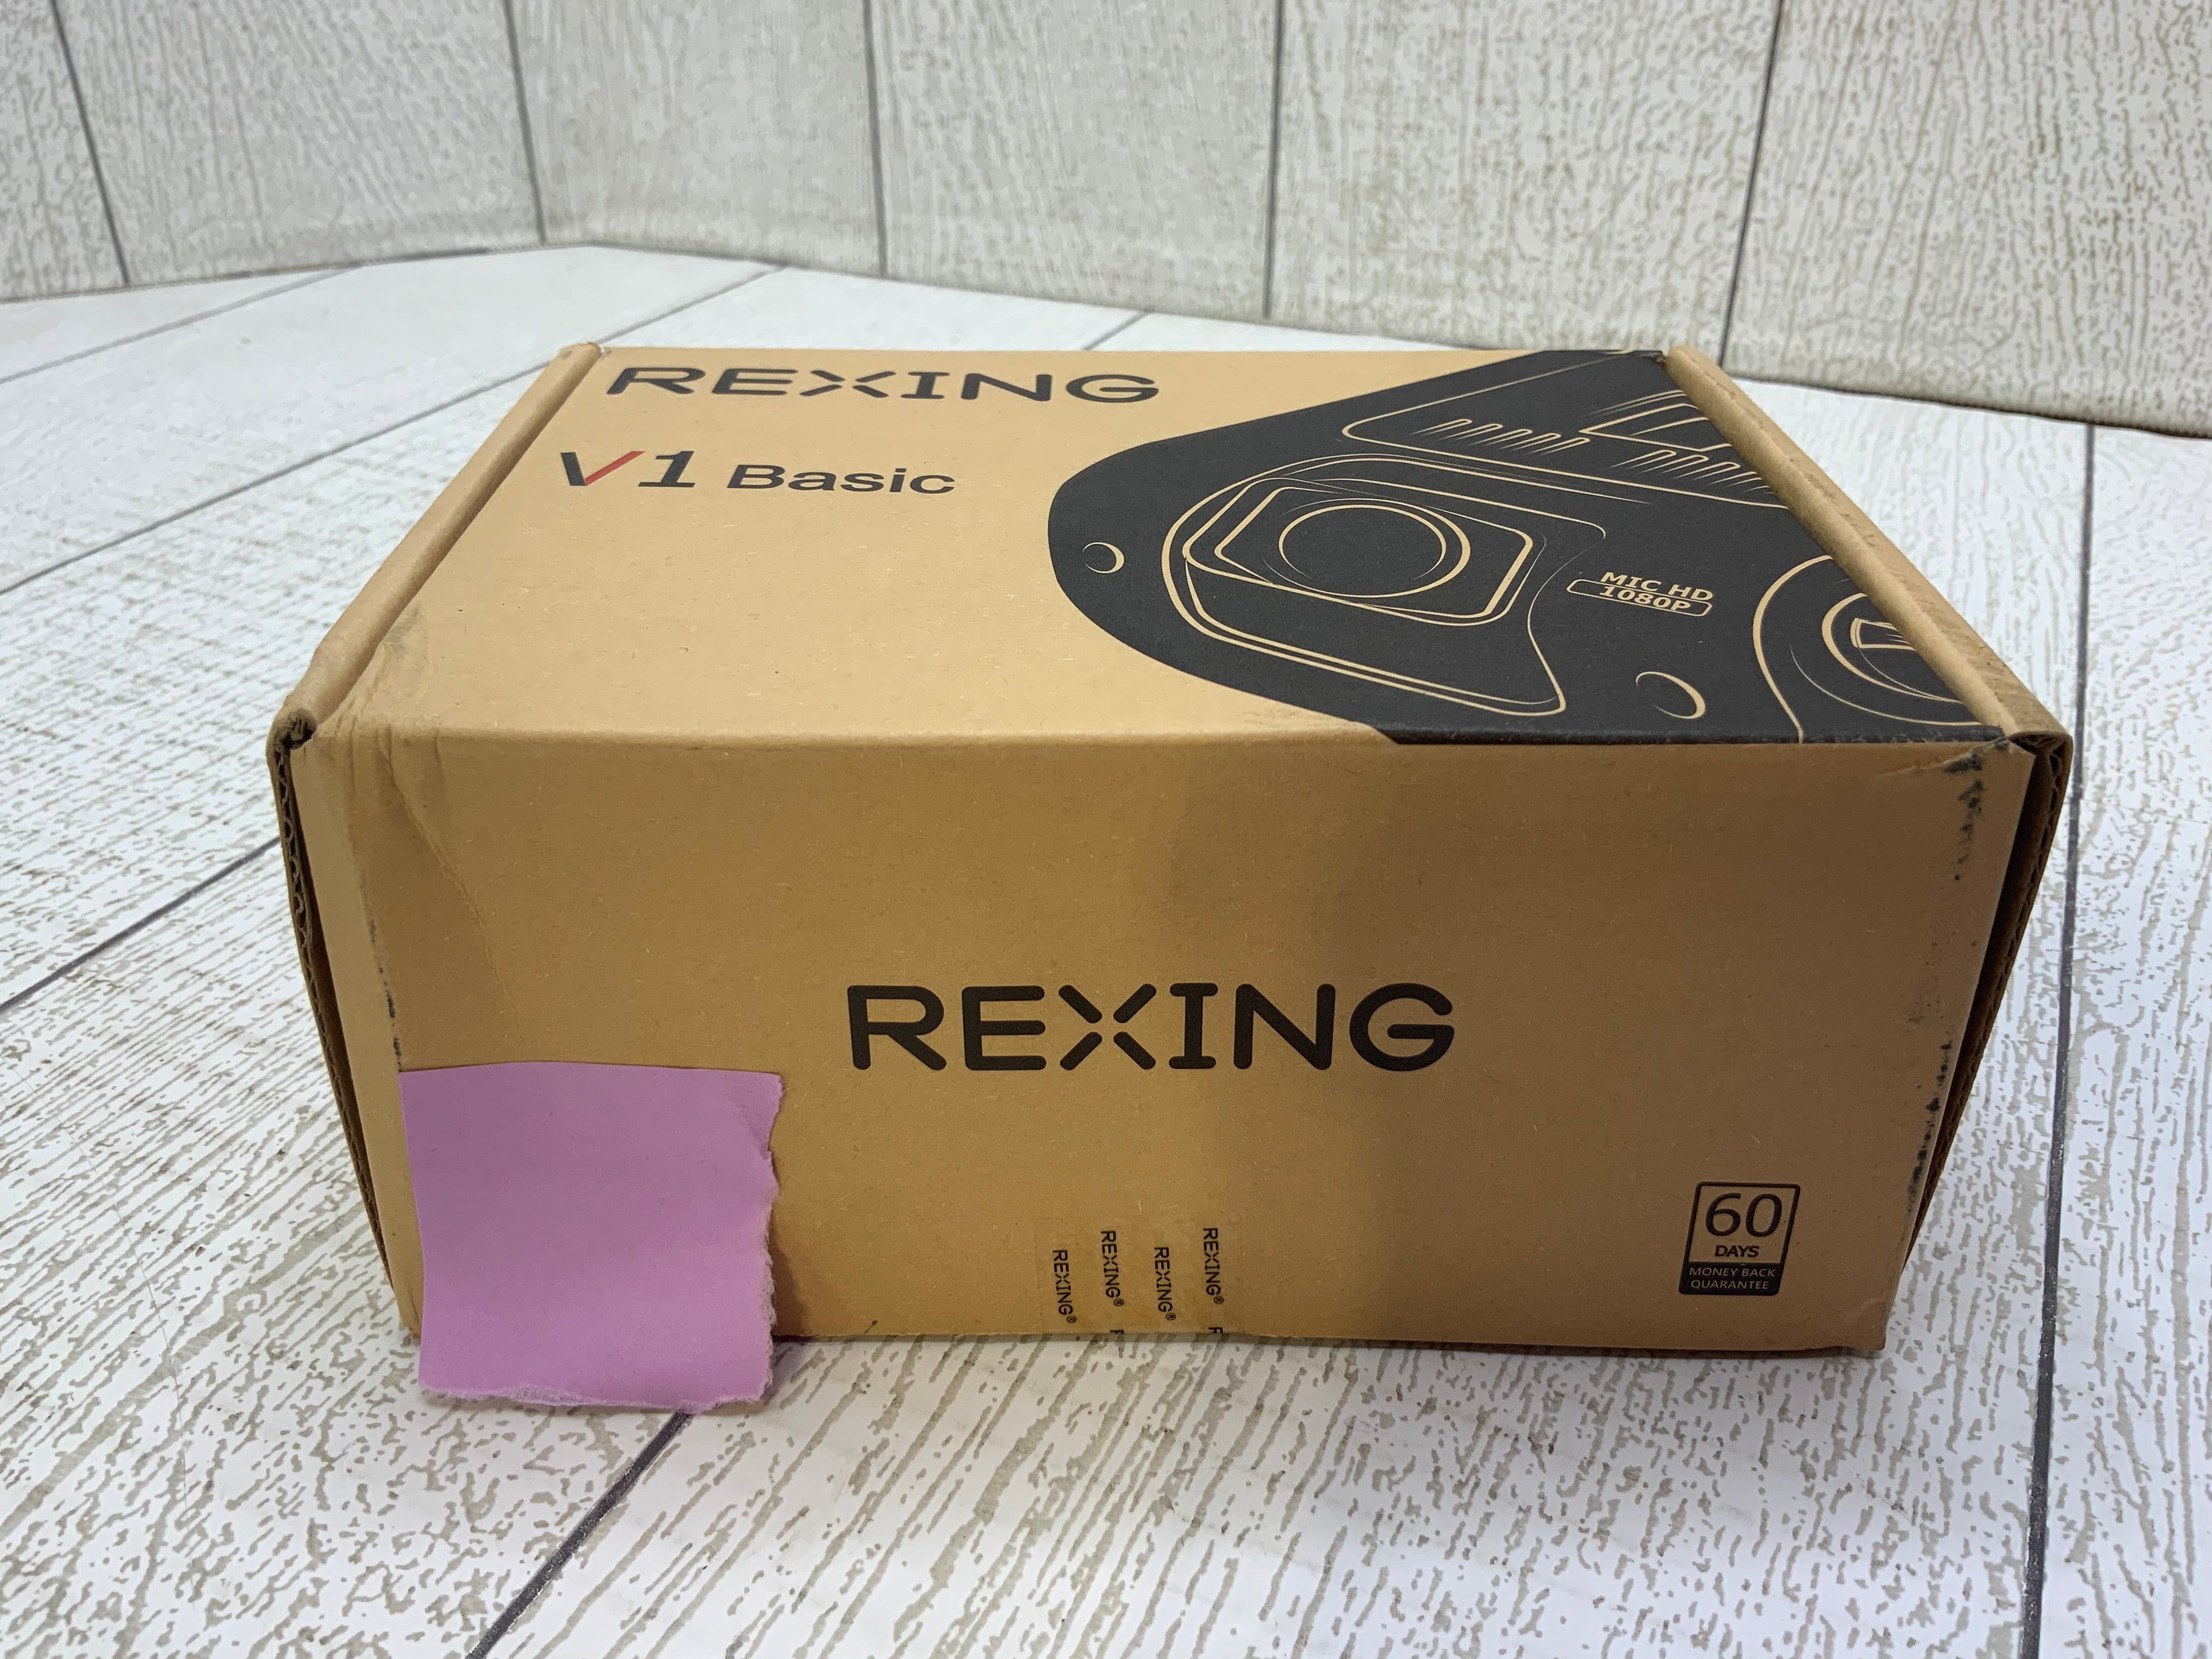 Rexing V1 Basic Dash Cam 1080p FHD DVR Car Driving Recorder 2.4